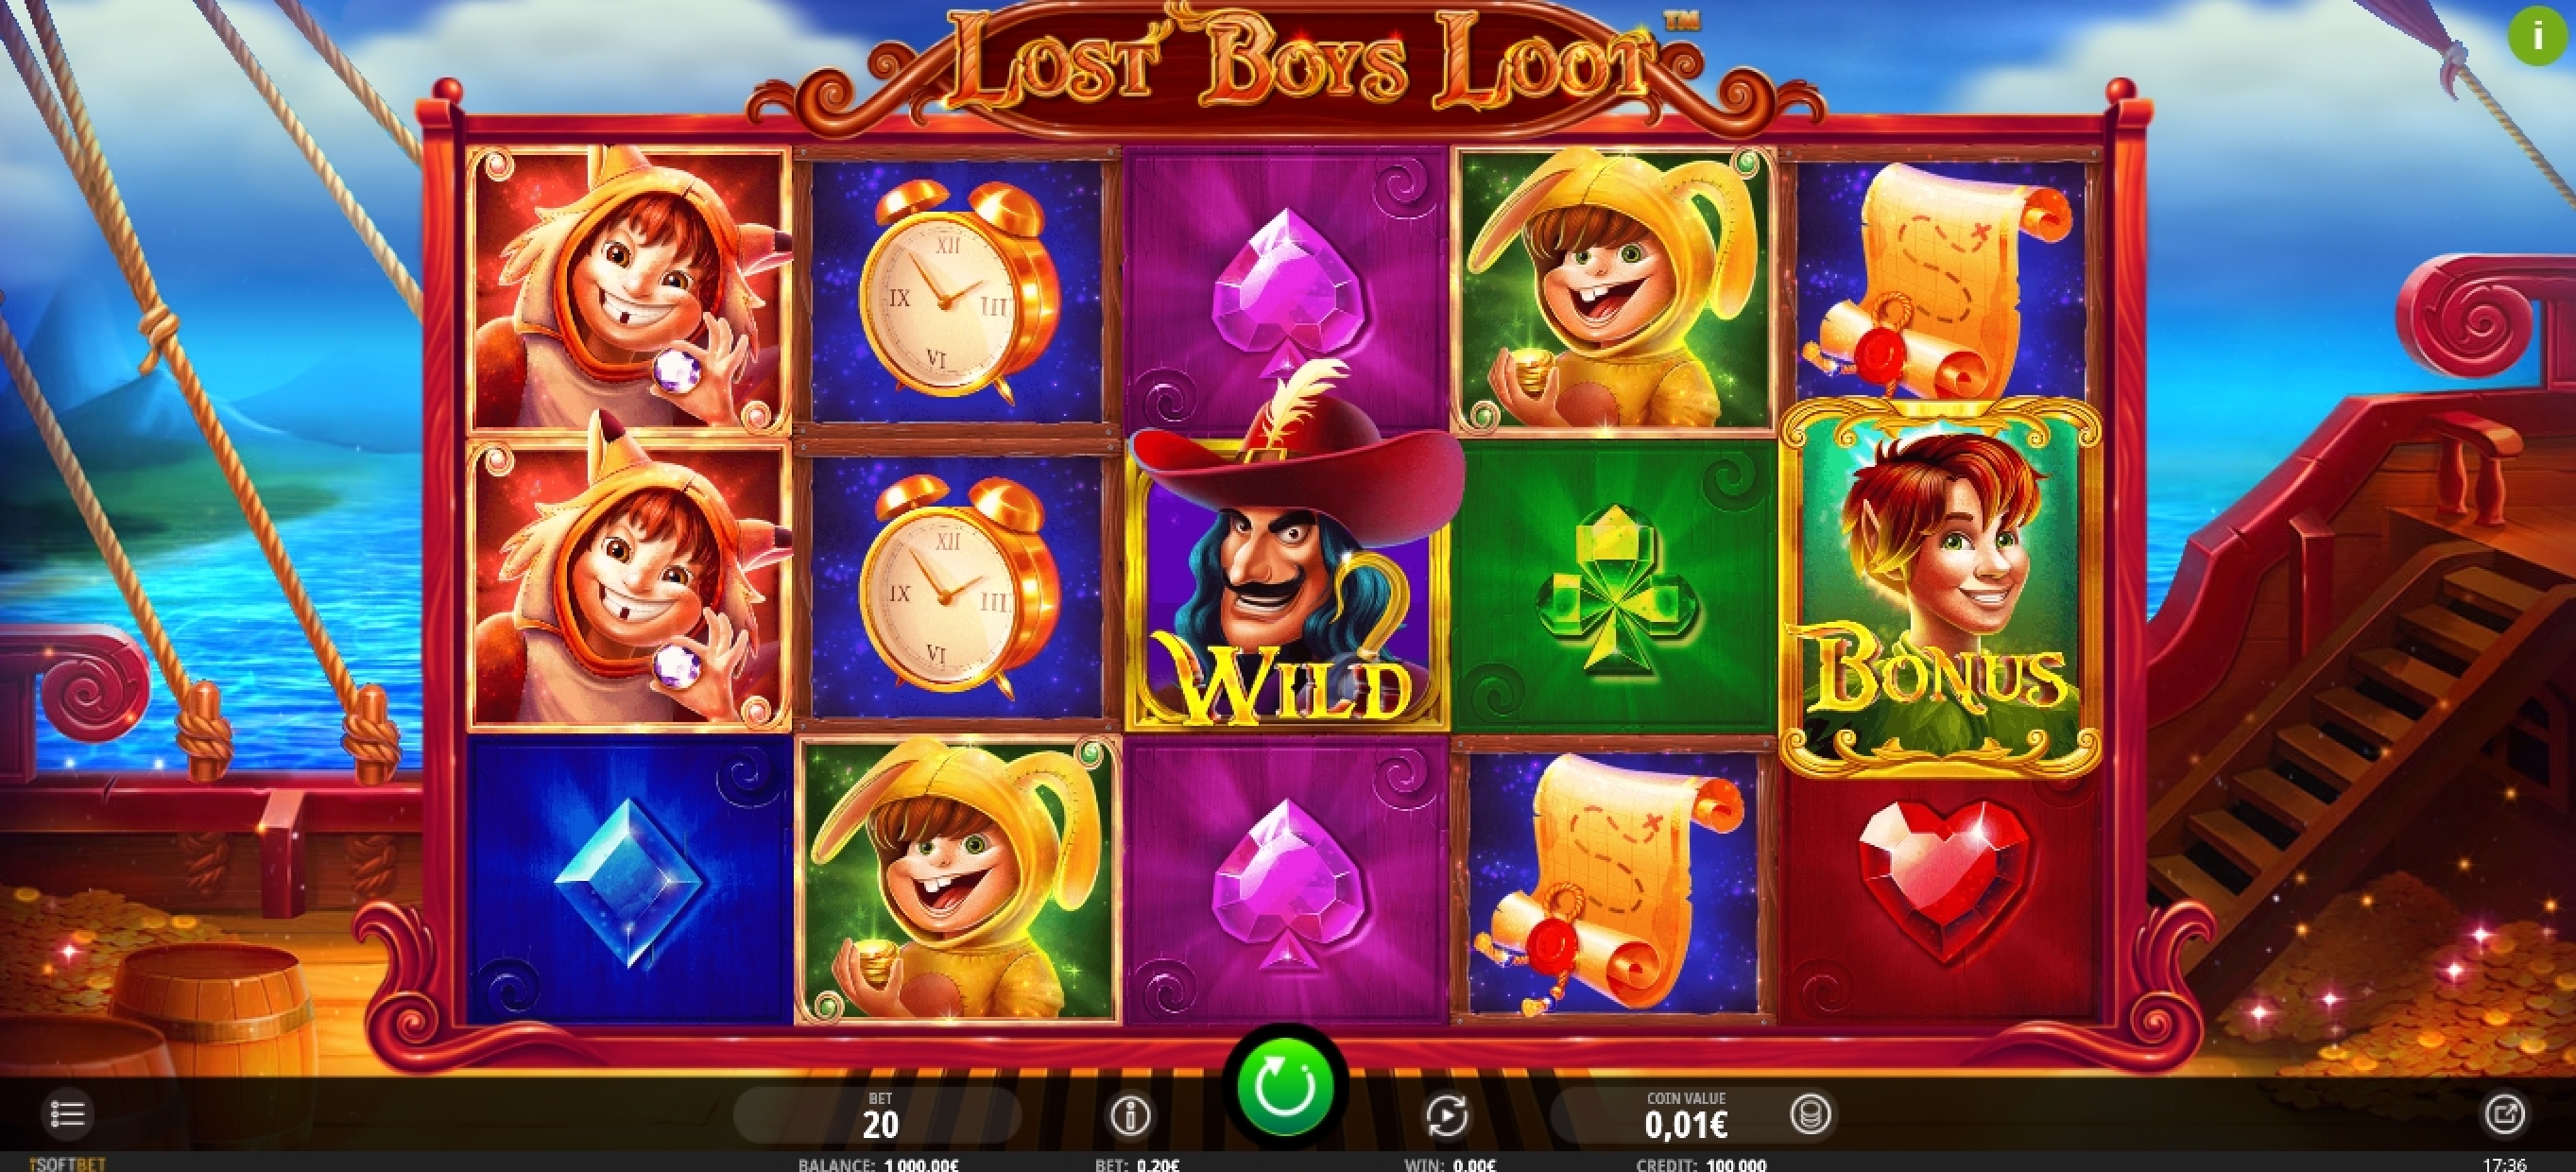 Reels in Lost Boys Loot Slot Game by iSoftBet